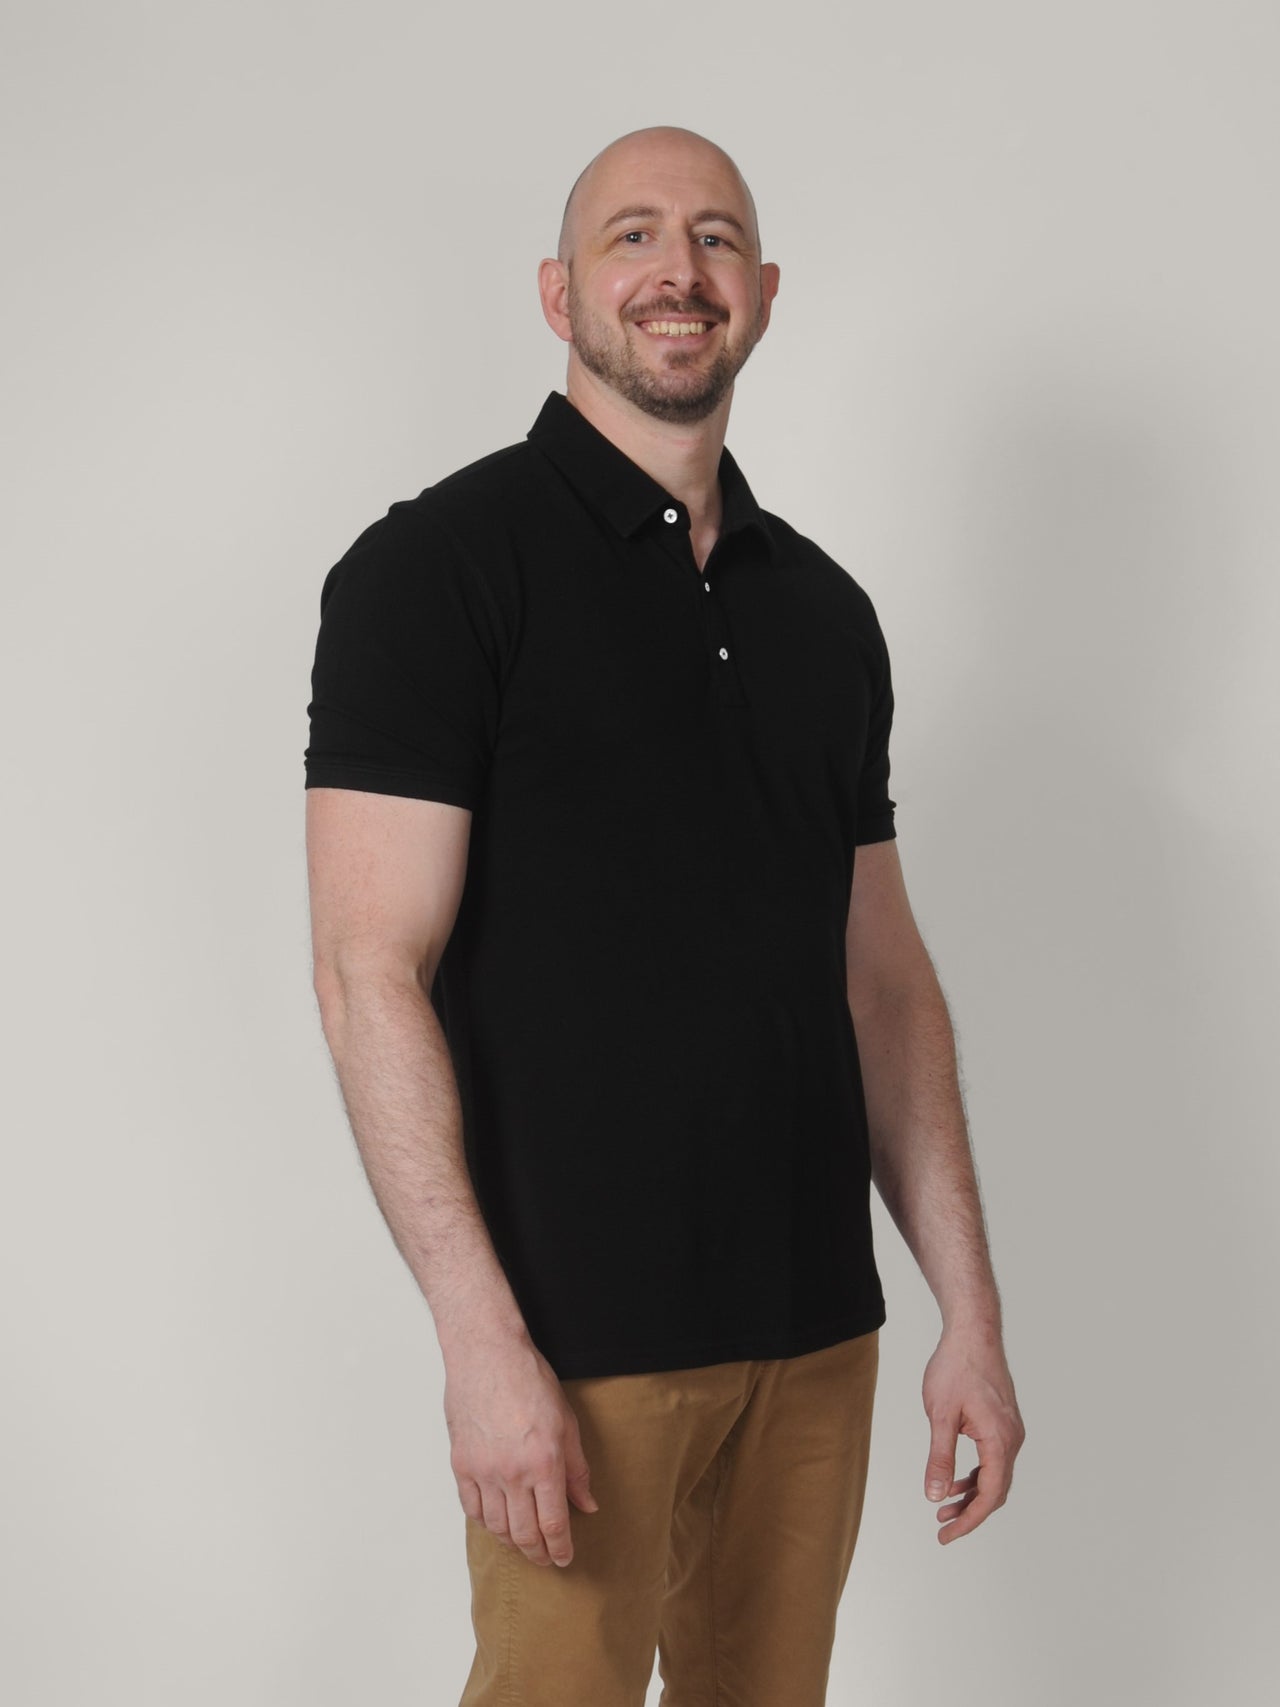 A tall skinny guy wearing a black XL tall polo shirt.